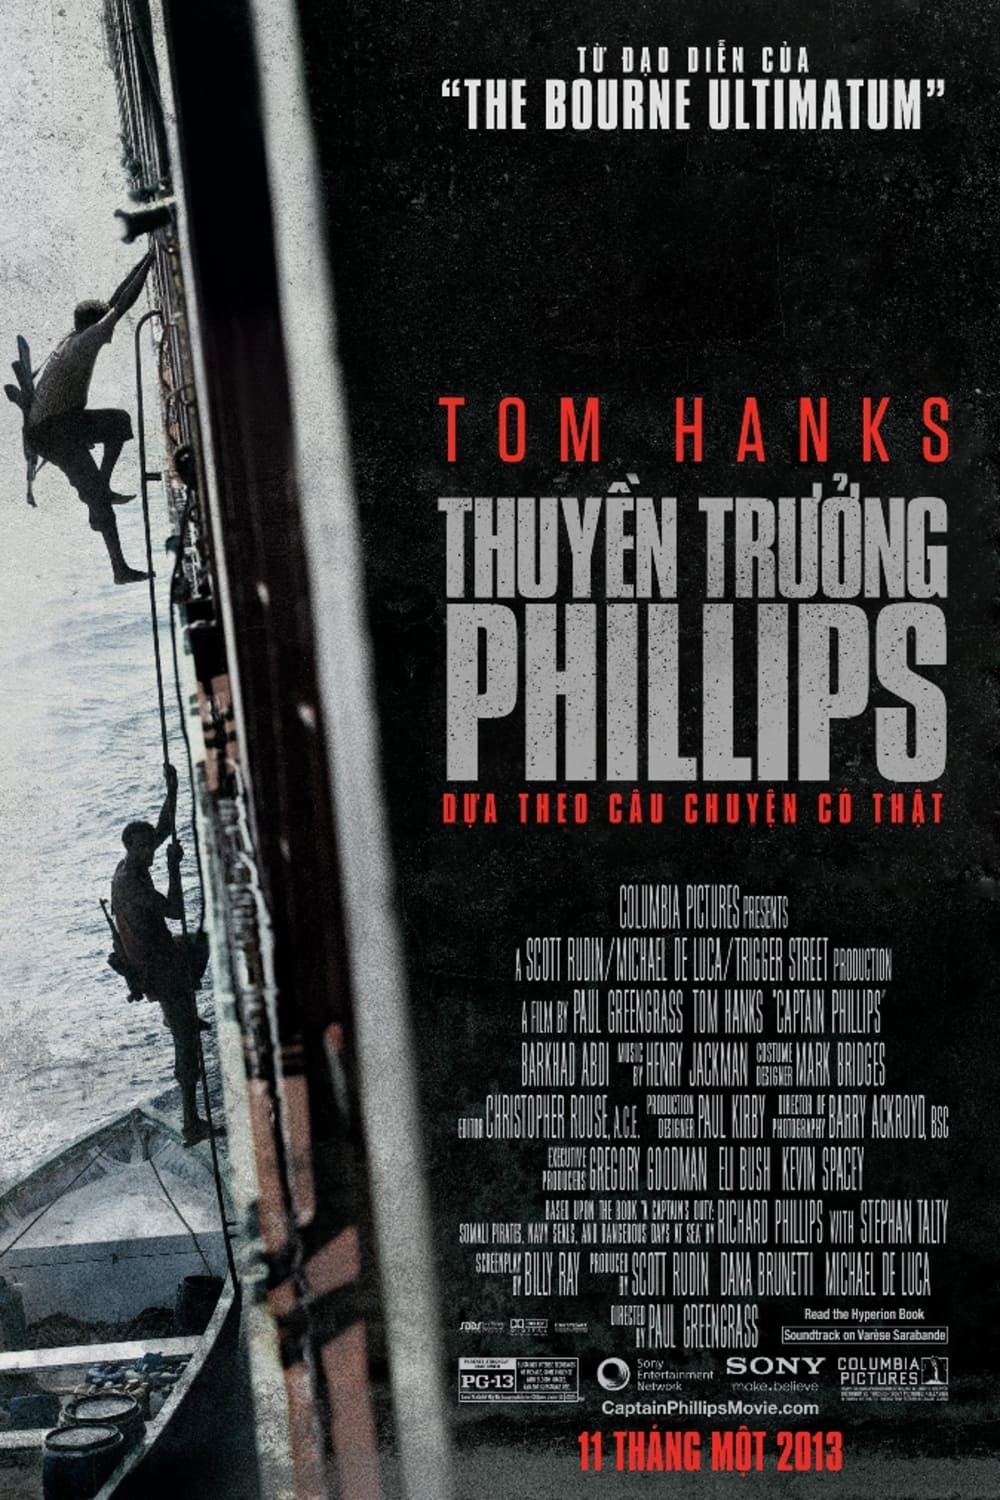 Thuyền Trưởng Phillips (Captain Phillips) [2013]